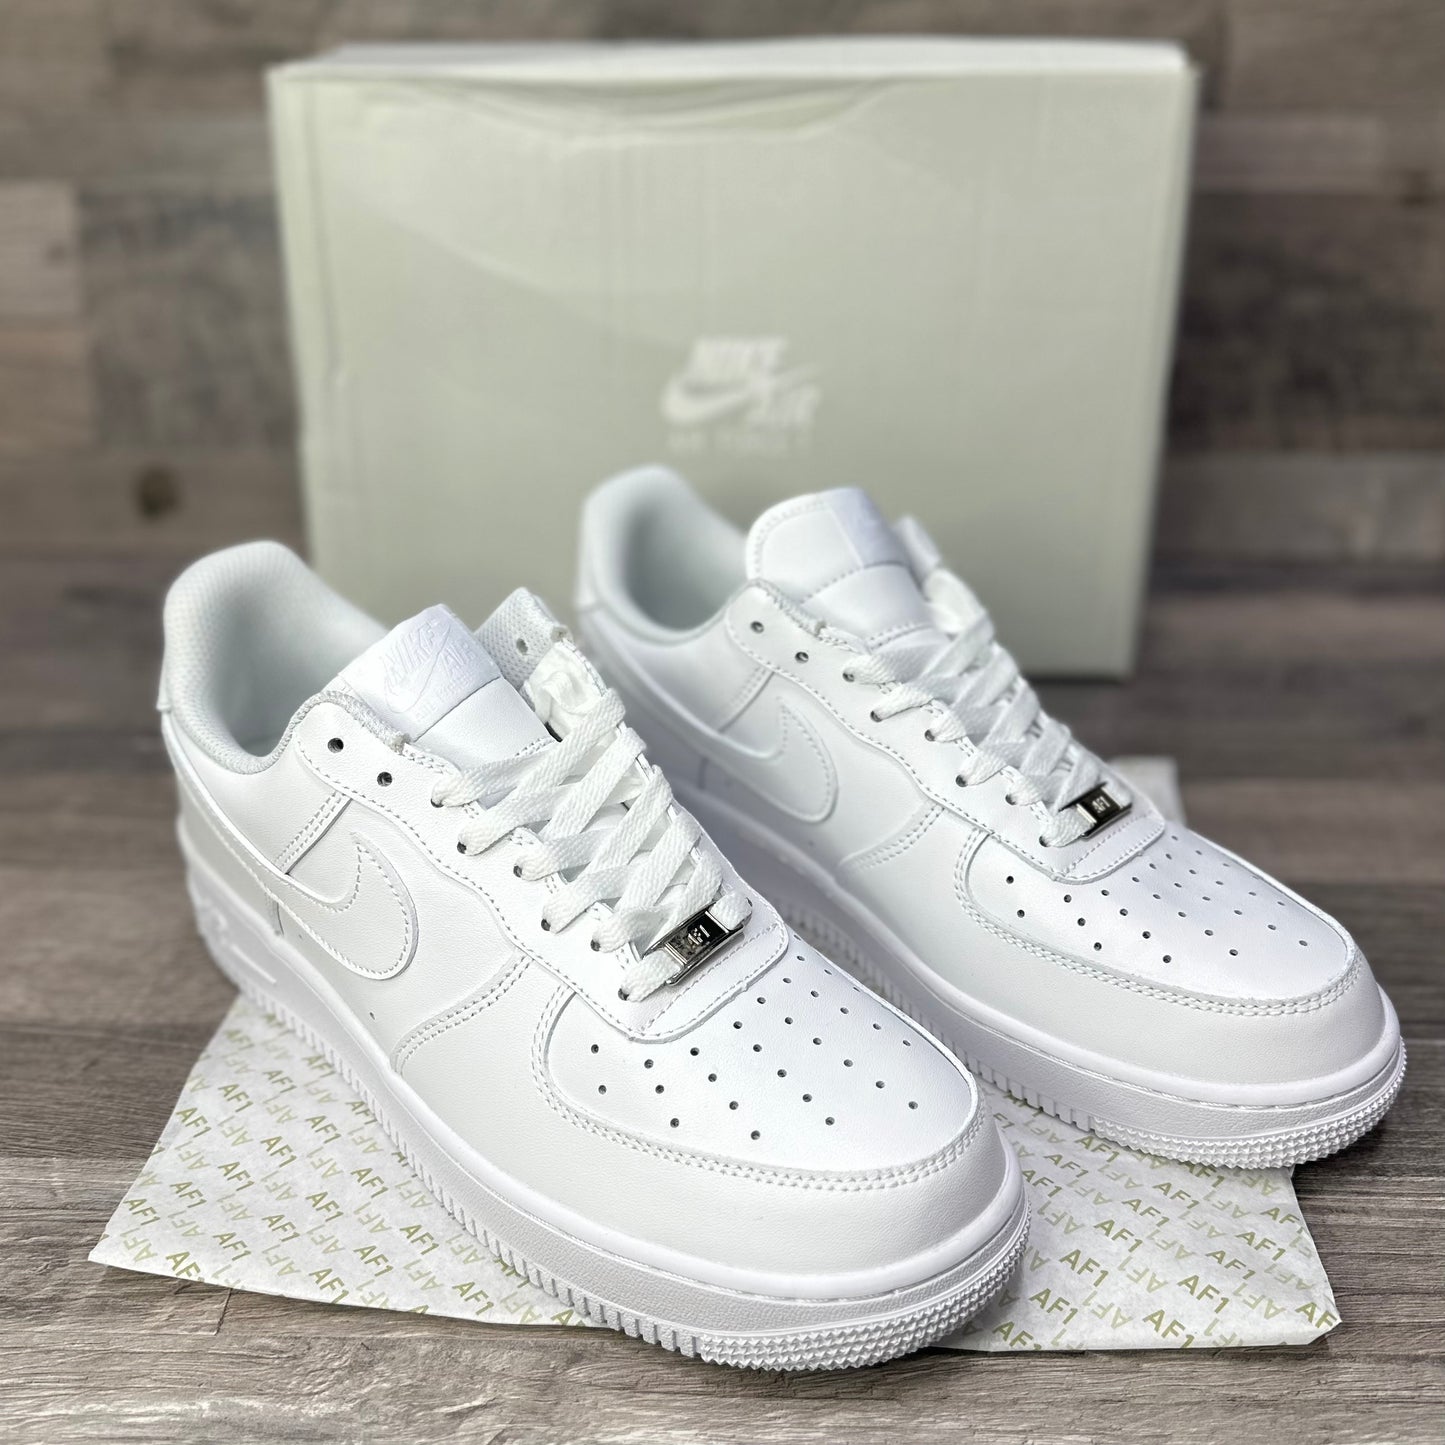 Nike Air Force 1 07” White